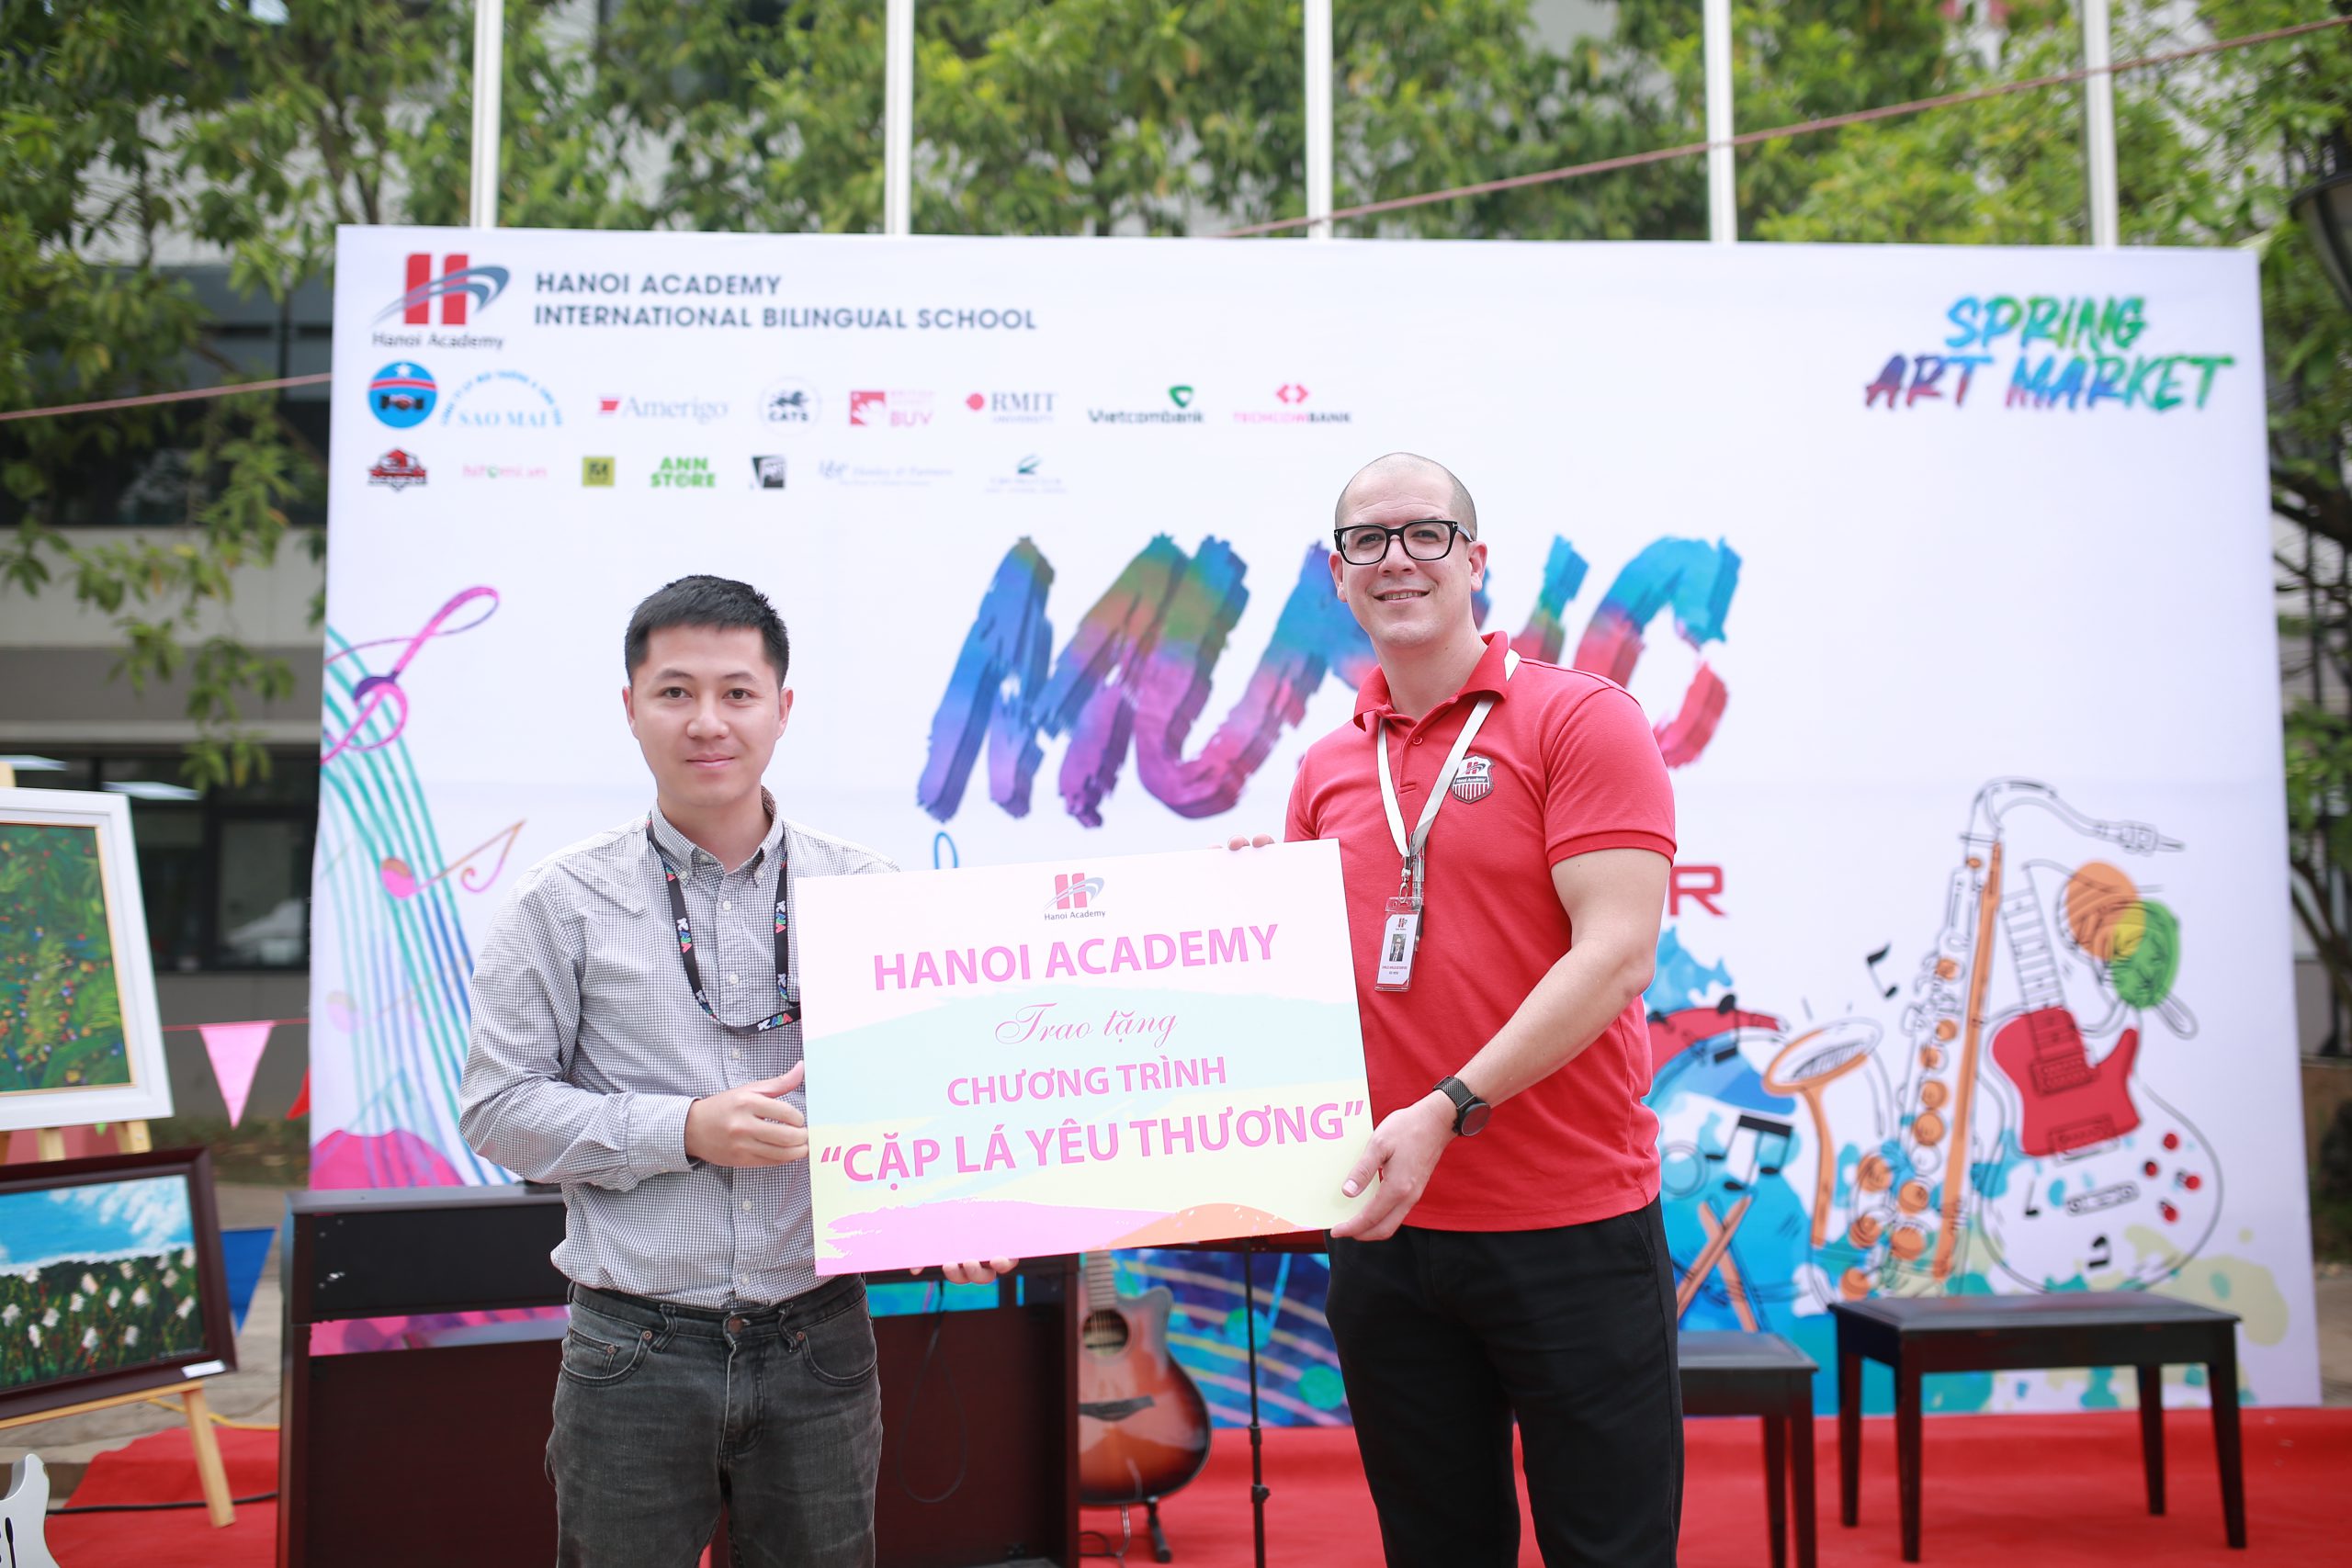 Hanoi Academy Spring Art Market 2019